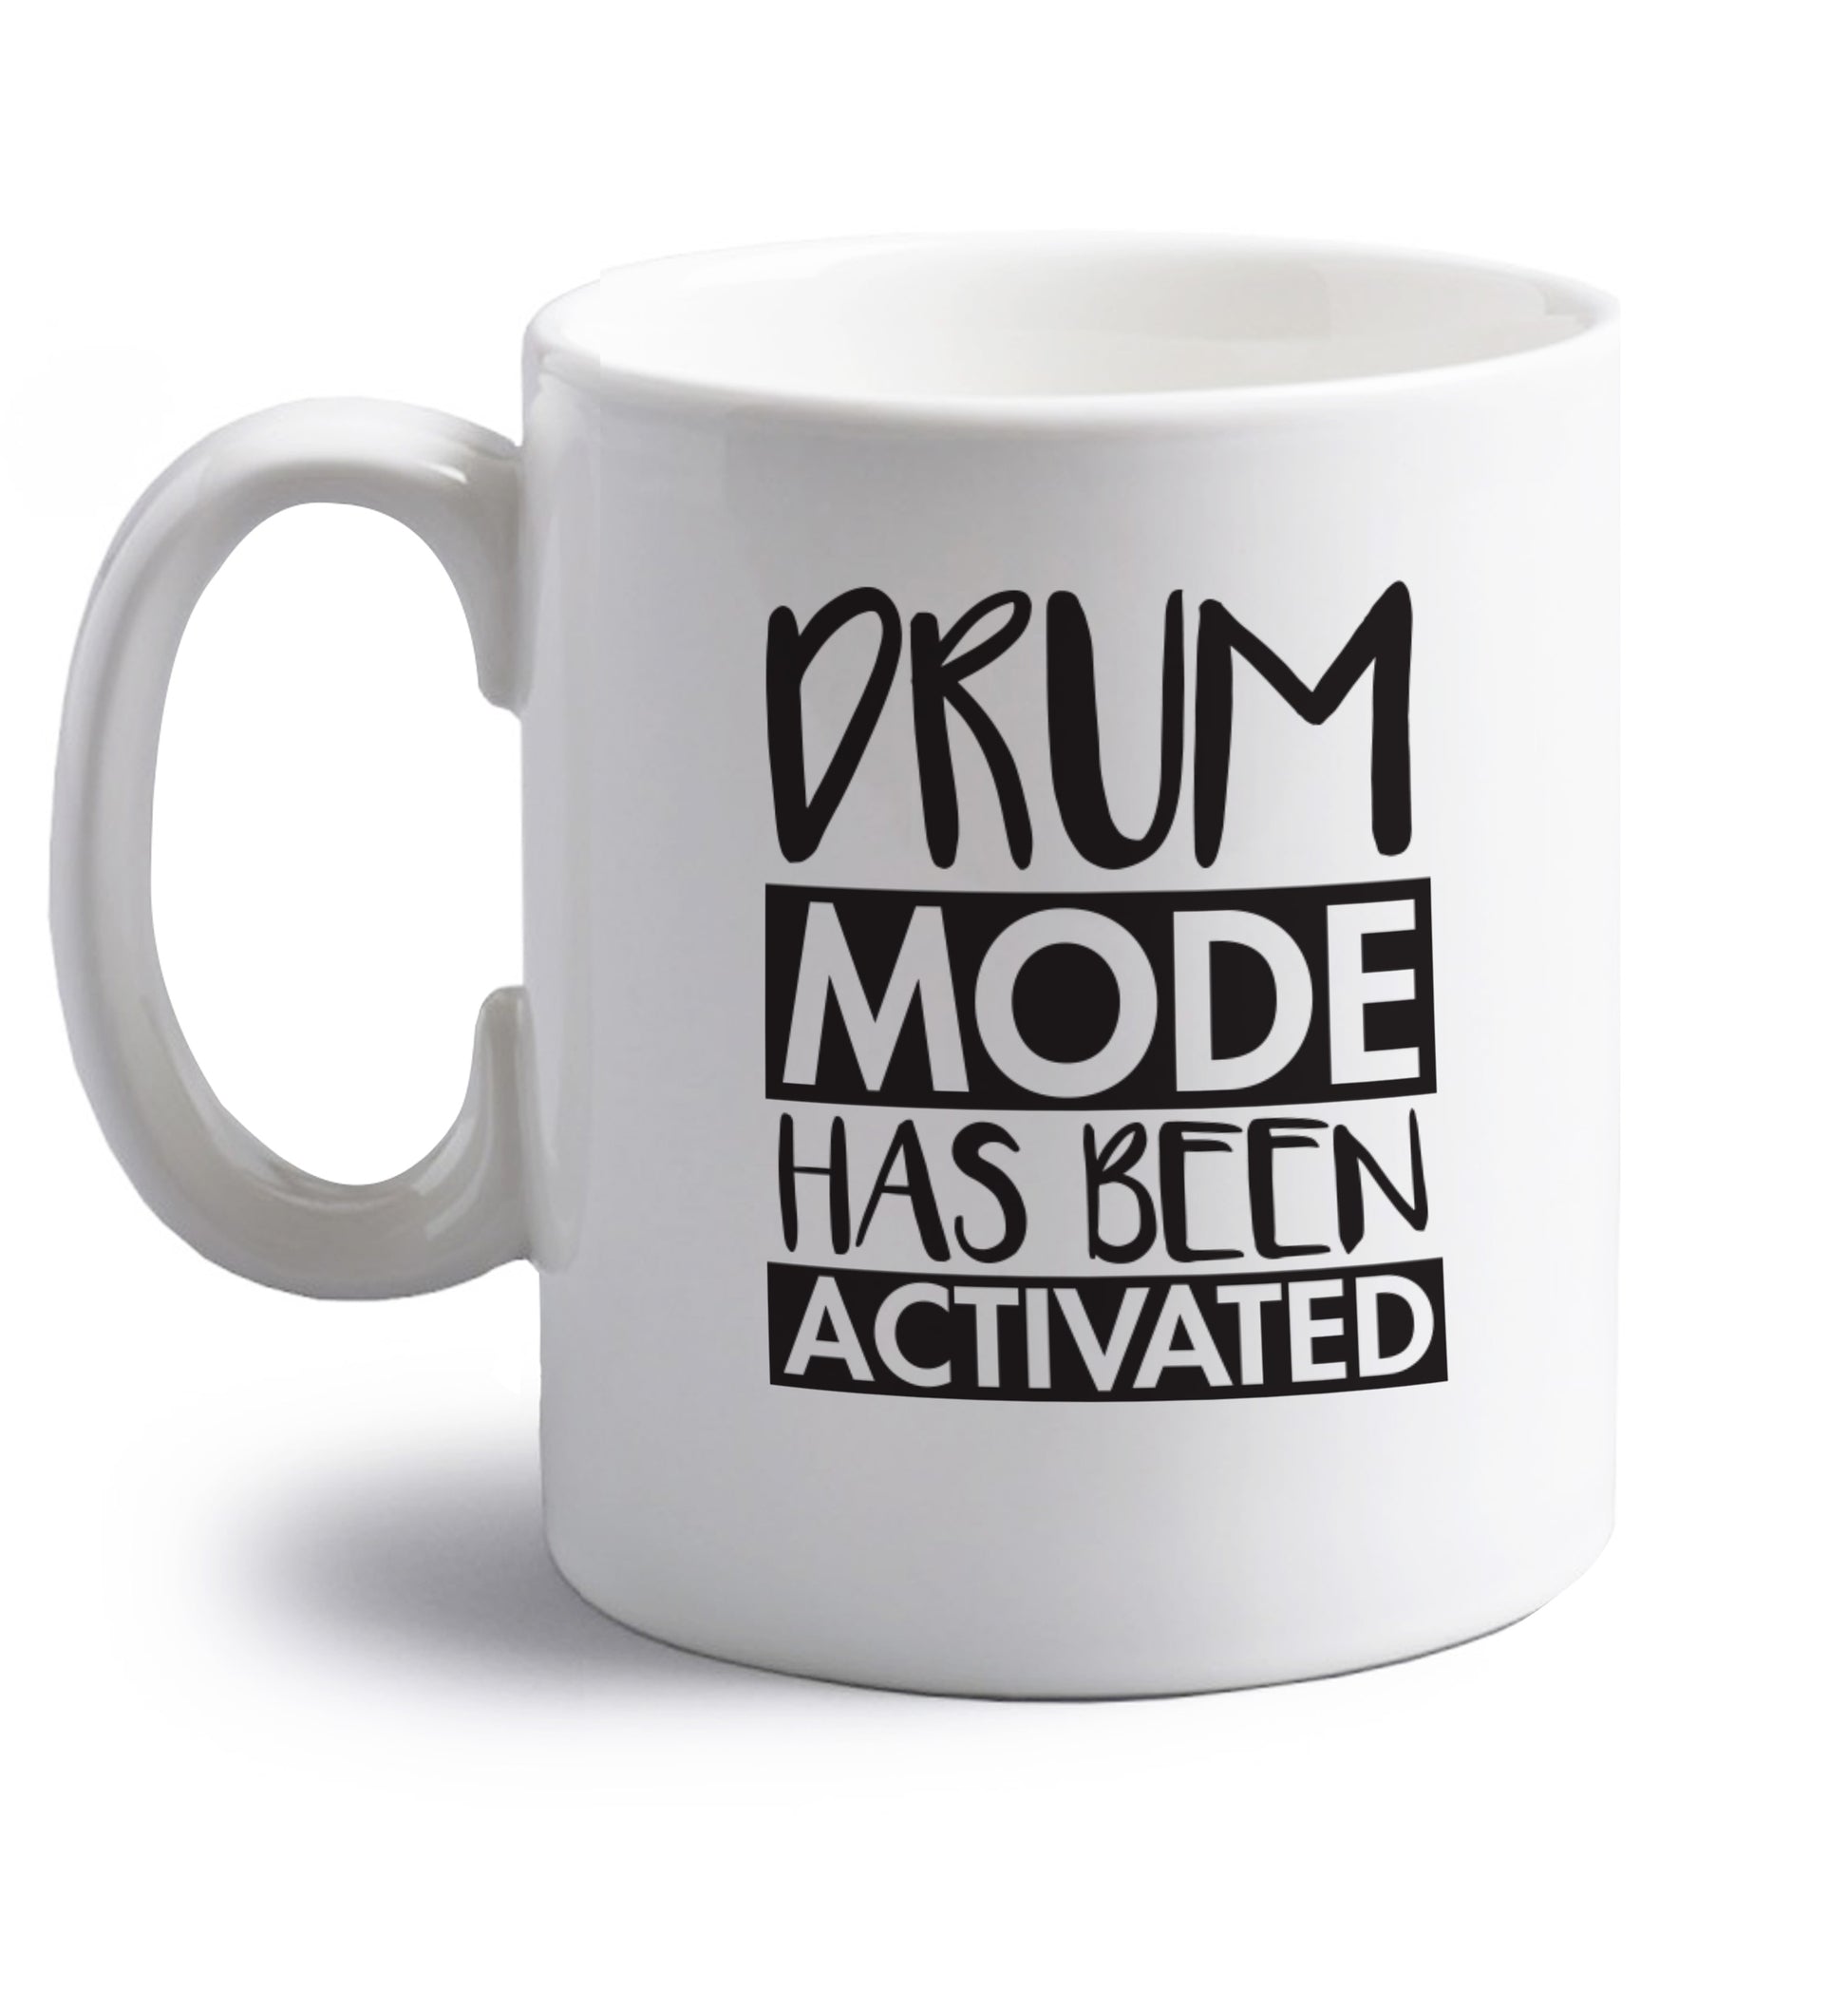 Drum mode activated right handed white ceramic mug 